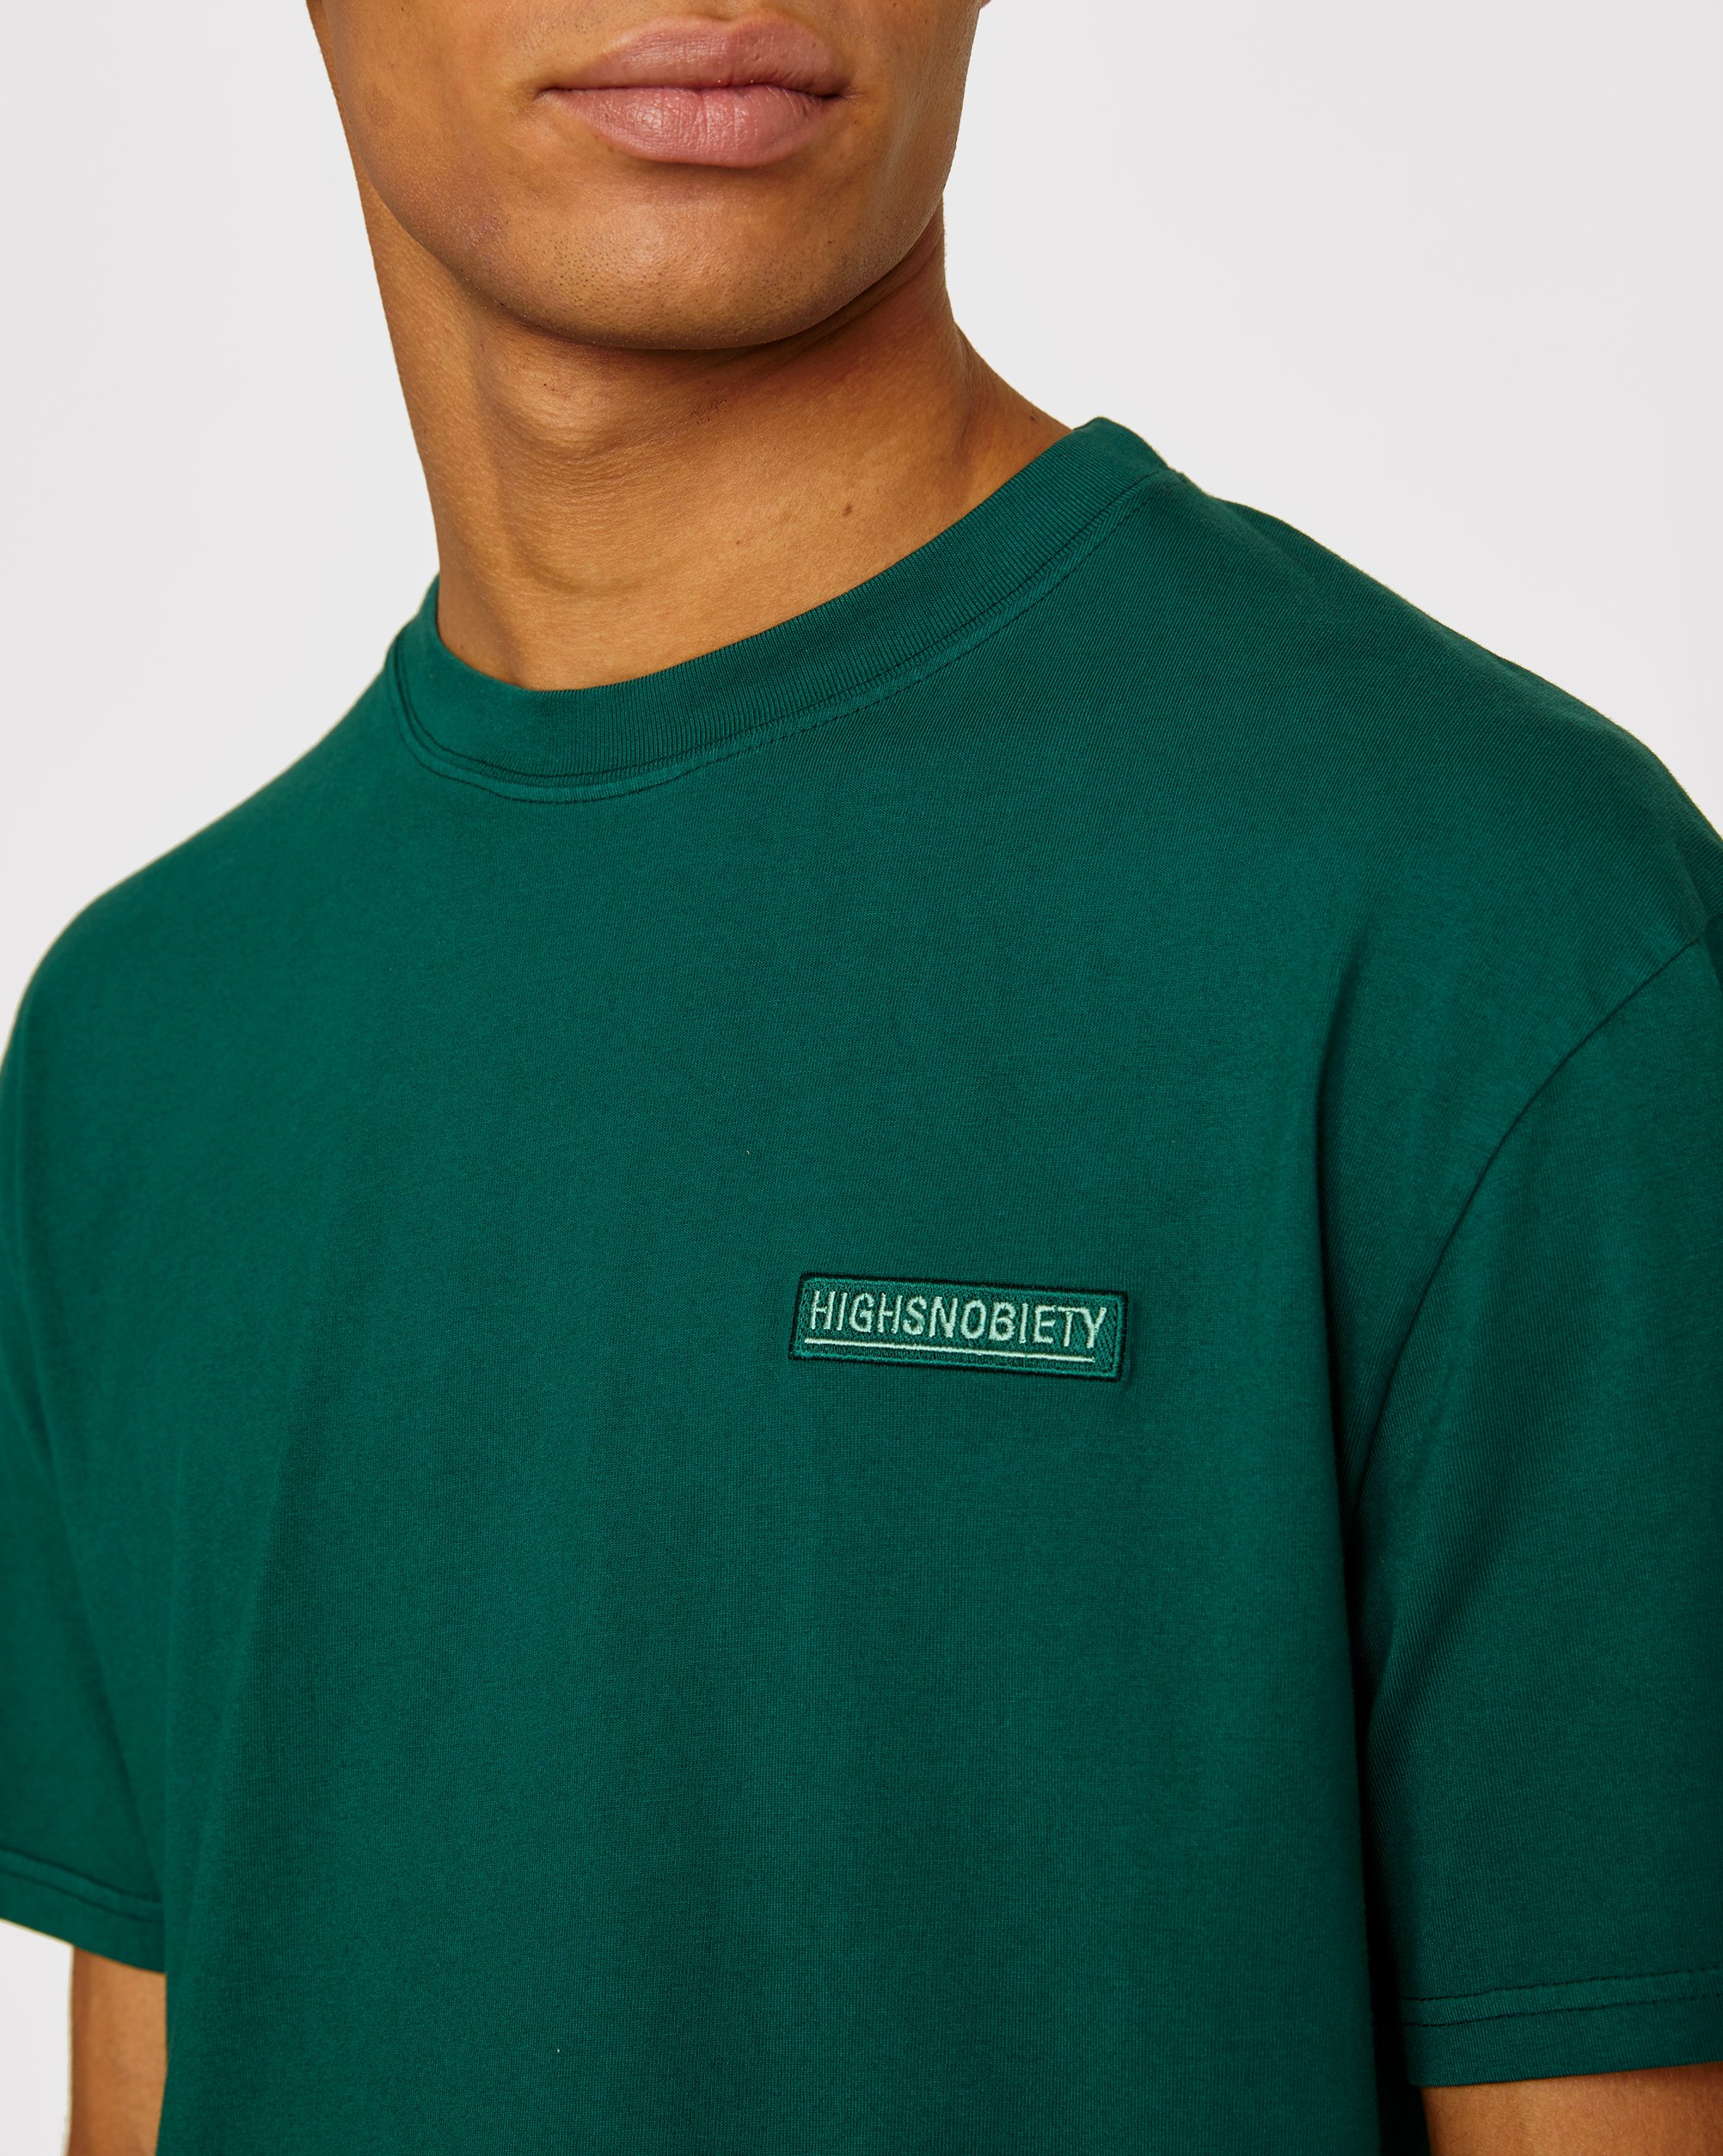 Highsnobiety - Staples T-Shirt Green - Clothing - Green - Image 5